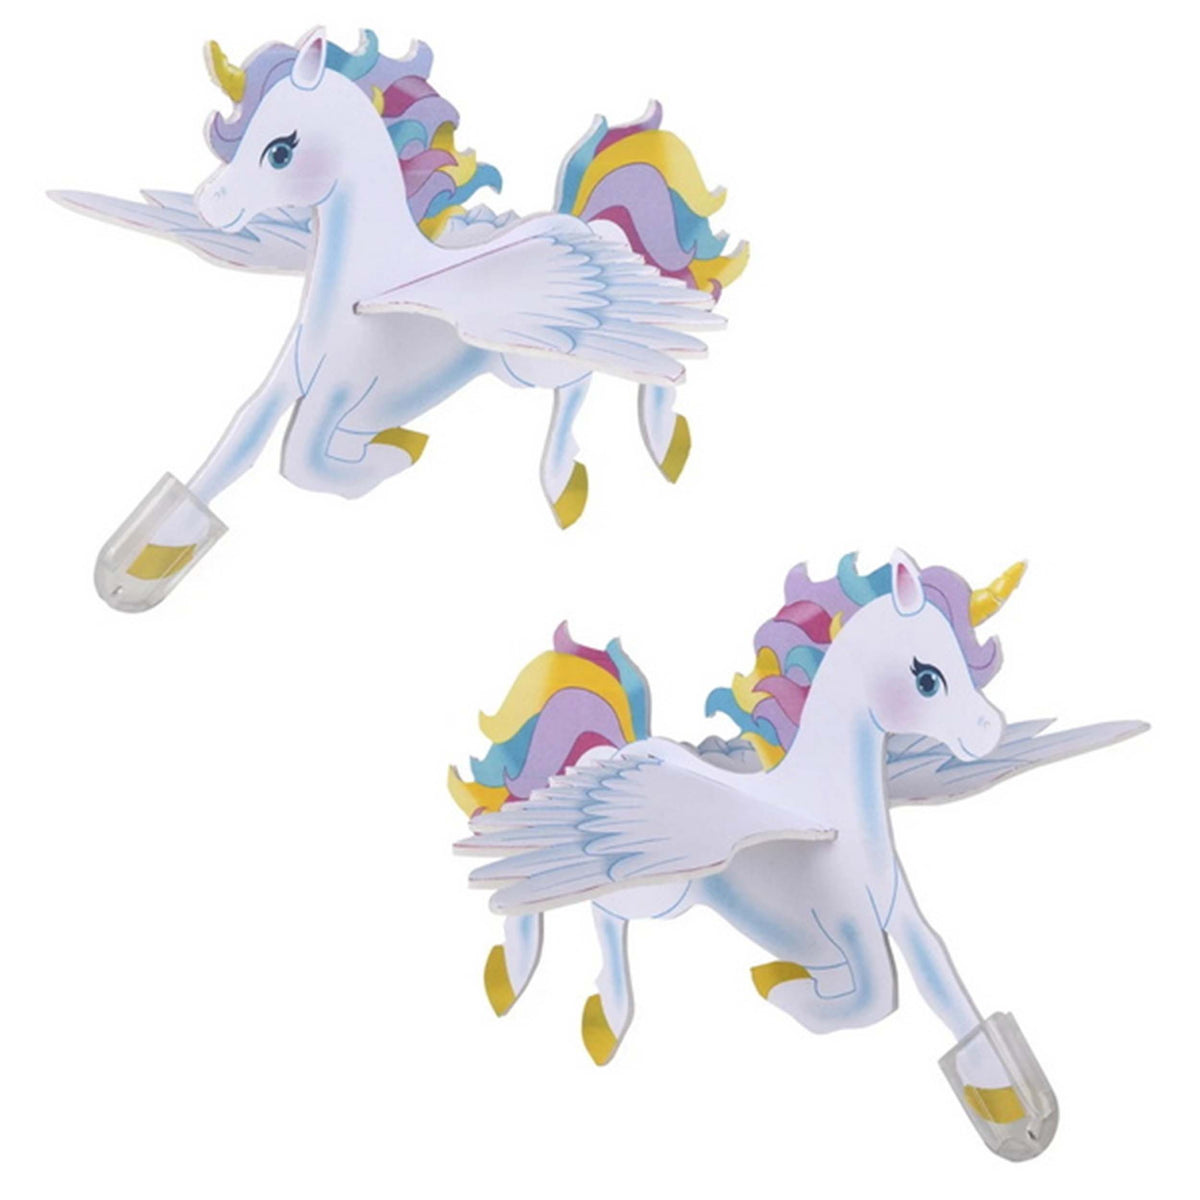 Unicorn Glider kids Toys In Bulk